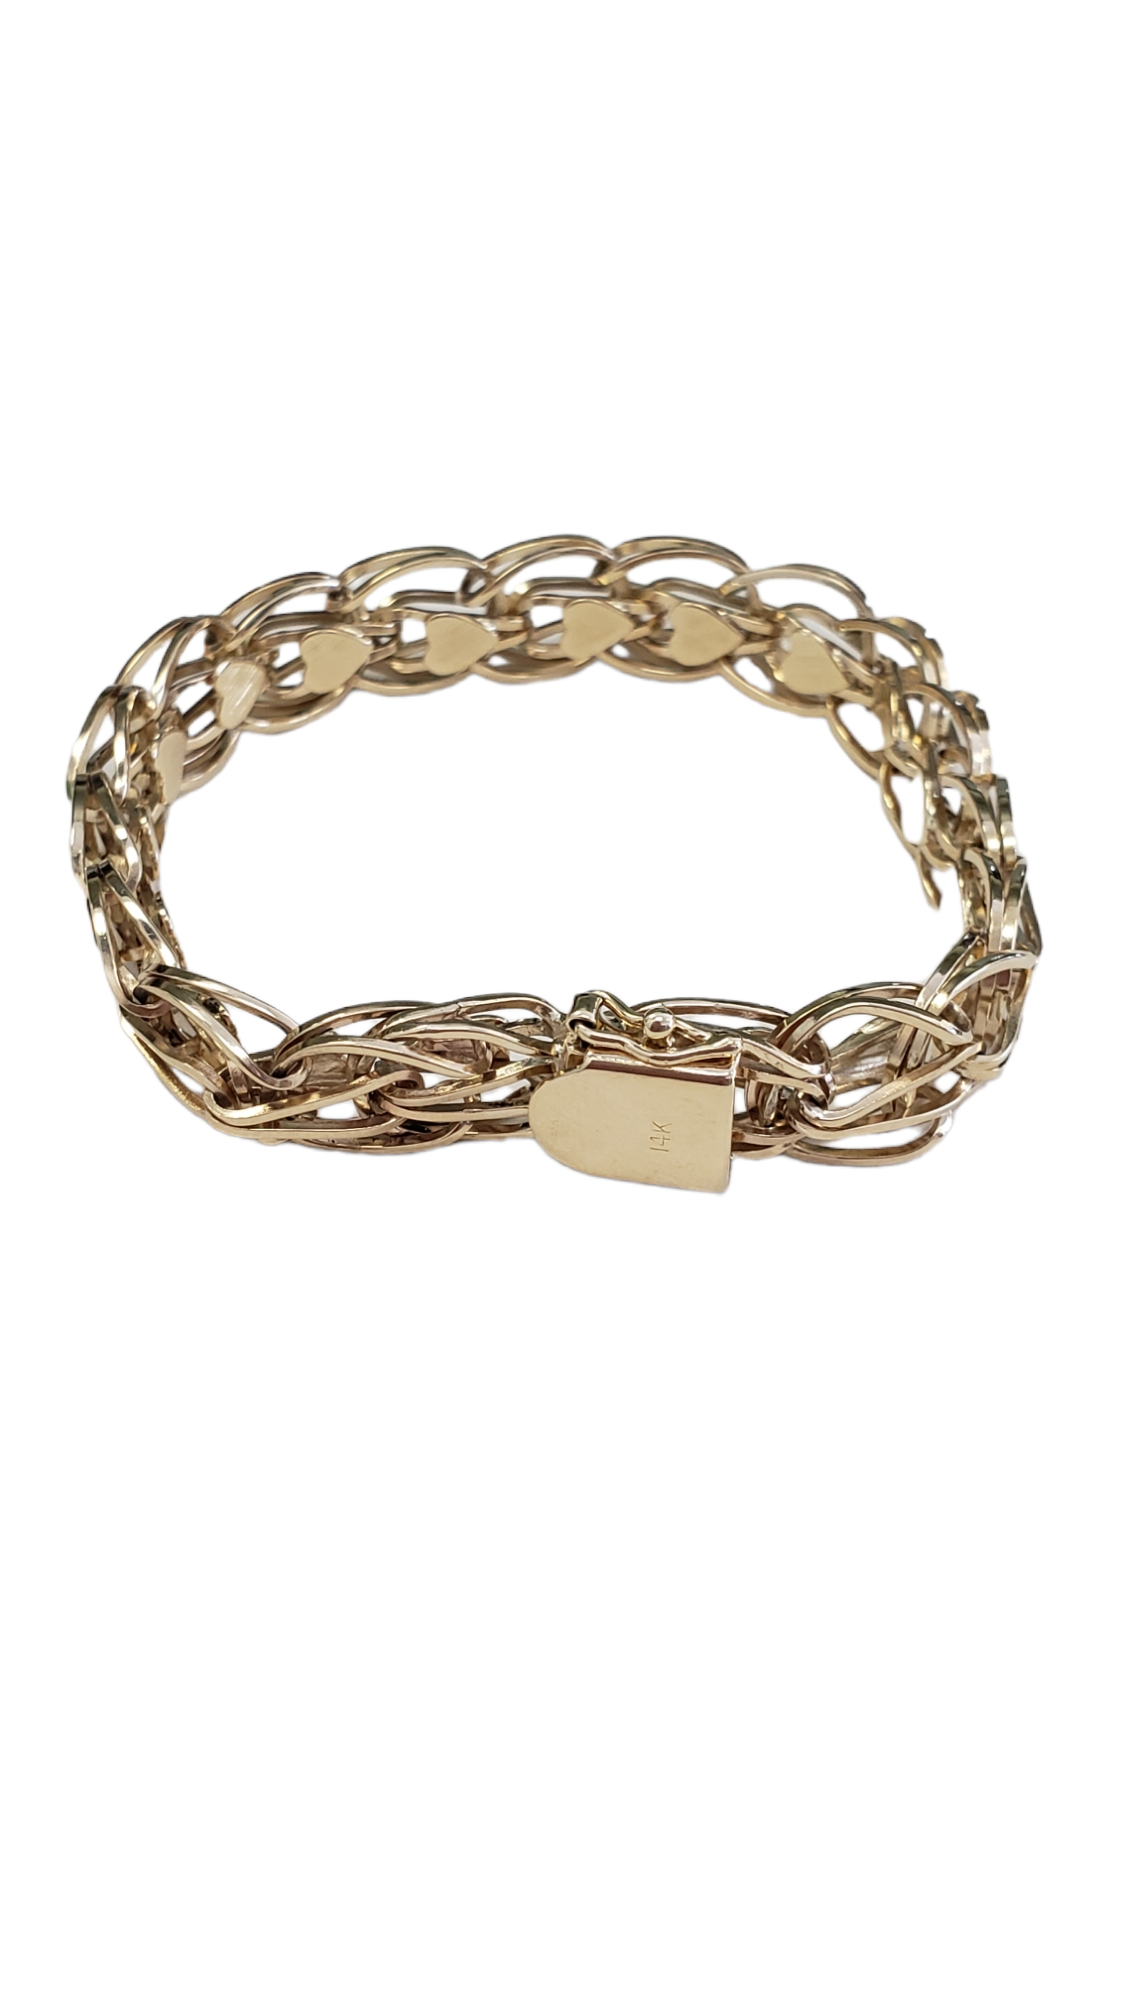 Fancy Style Heart Link Design Charm Bracelet made in 14-Karat Yellow Gold